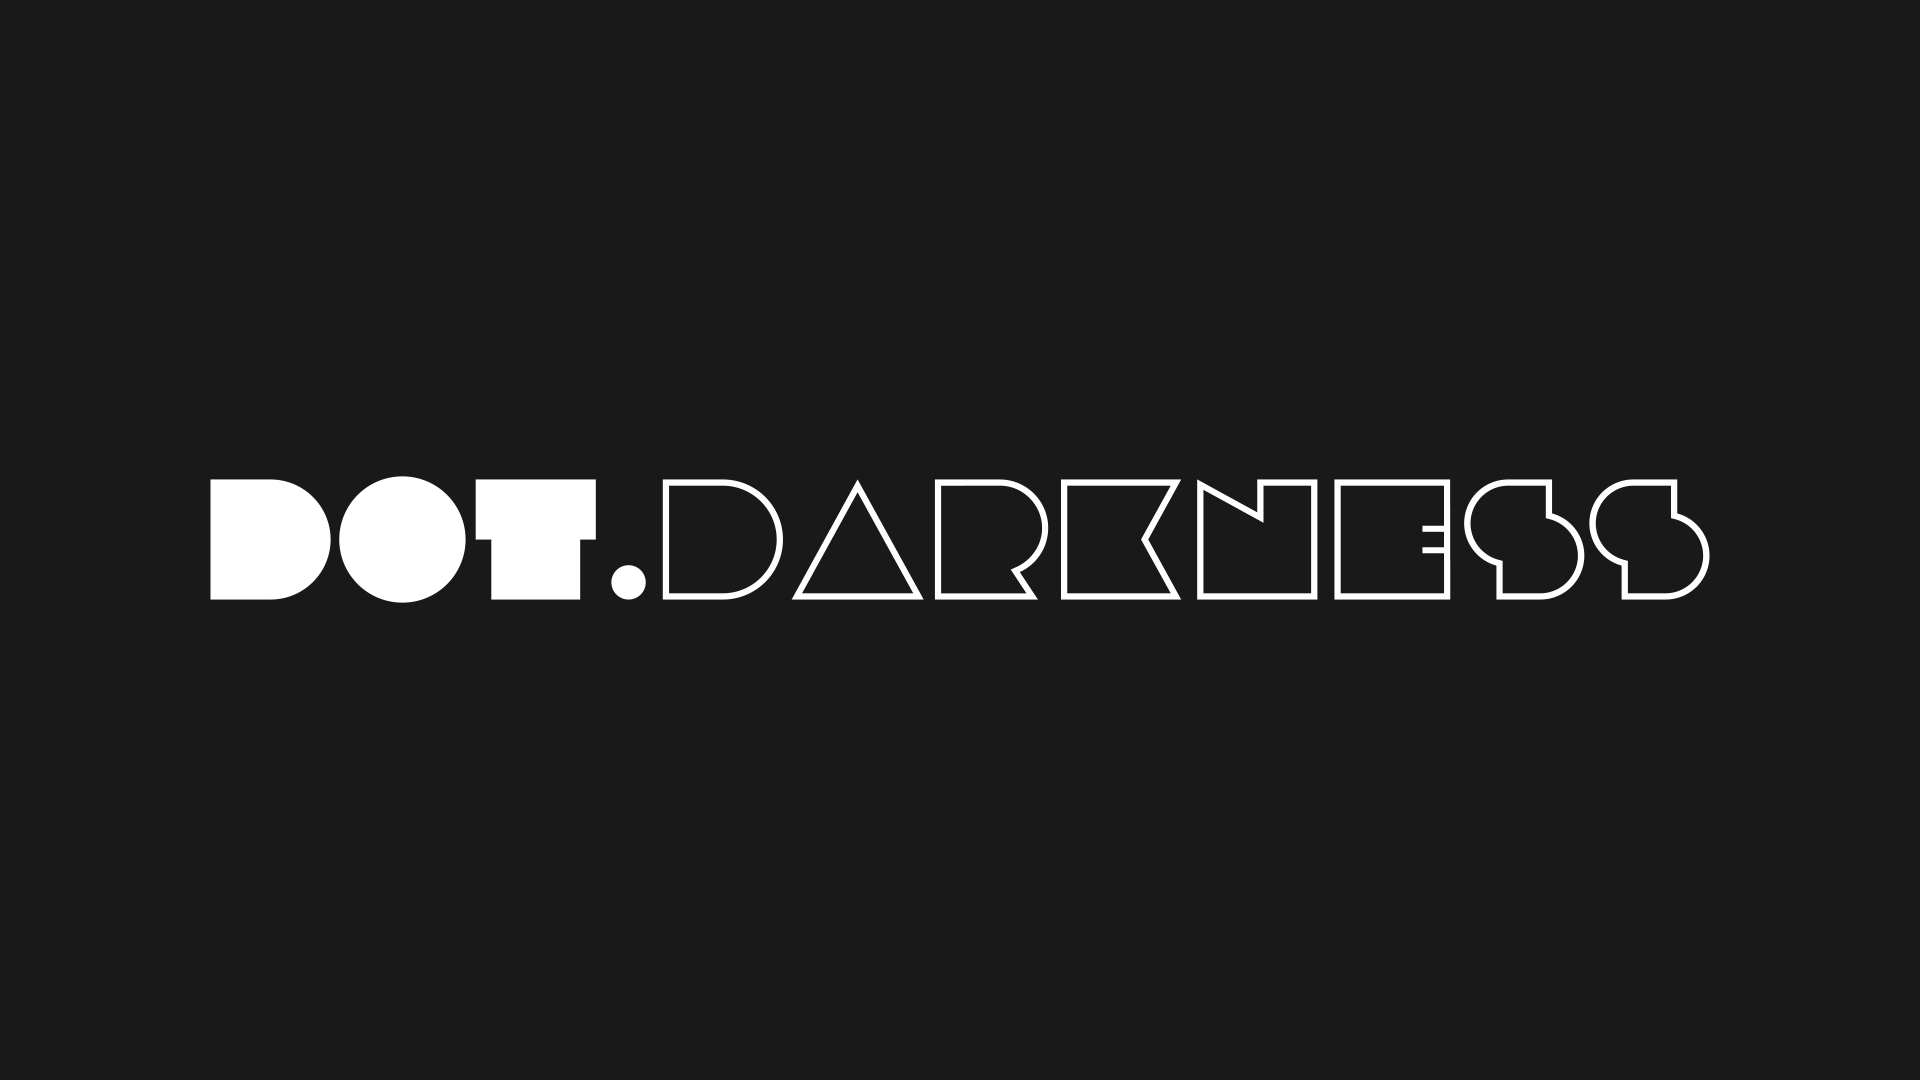 The banner dot.darkness logo